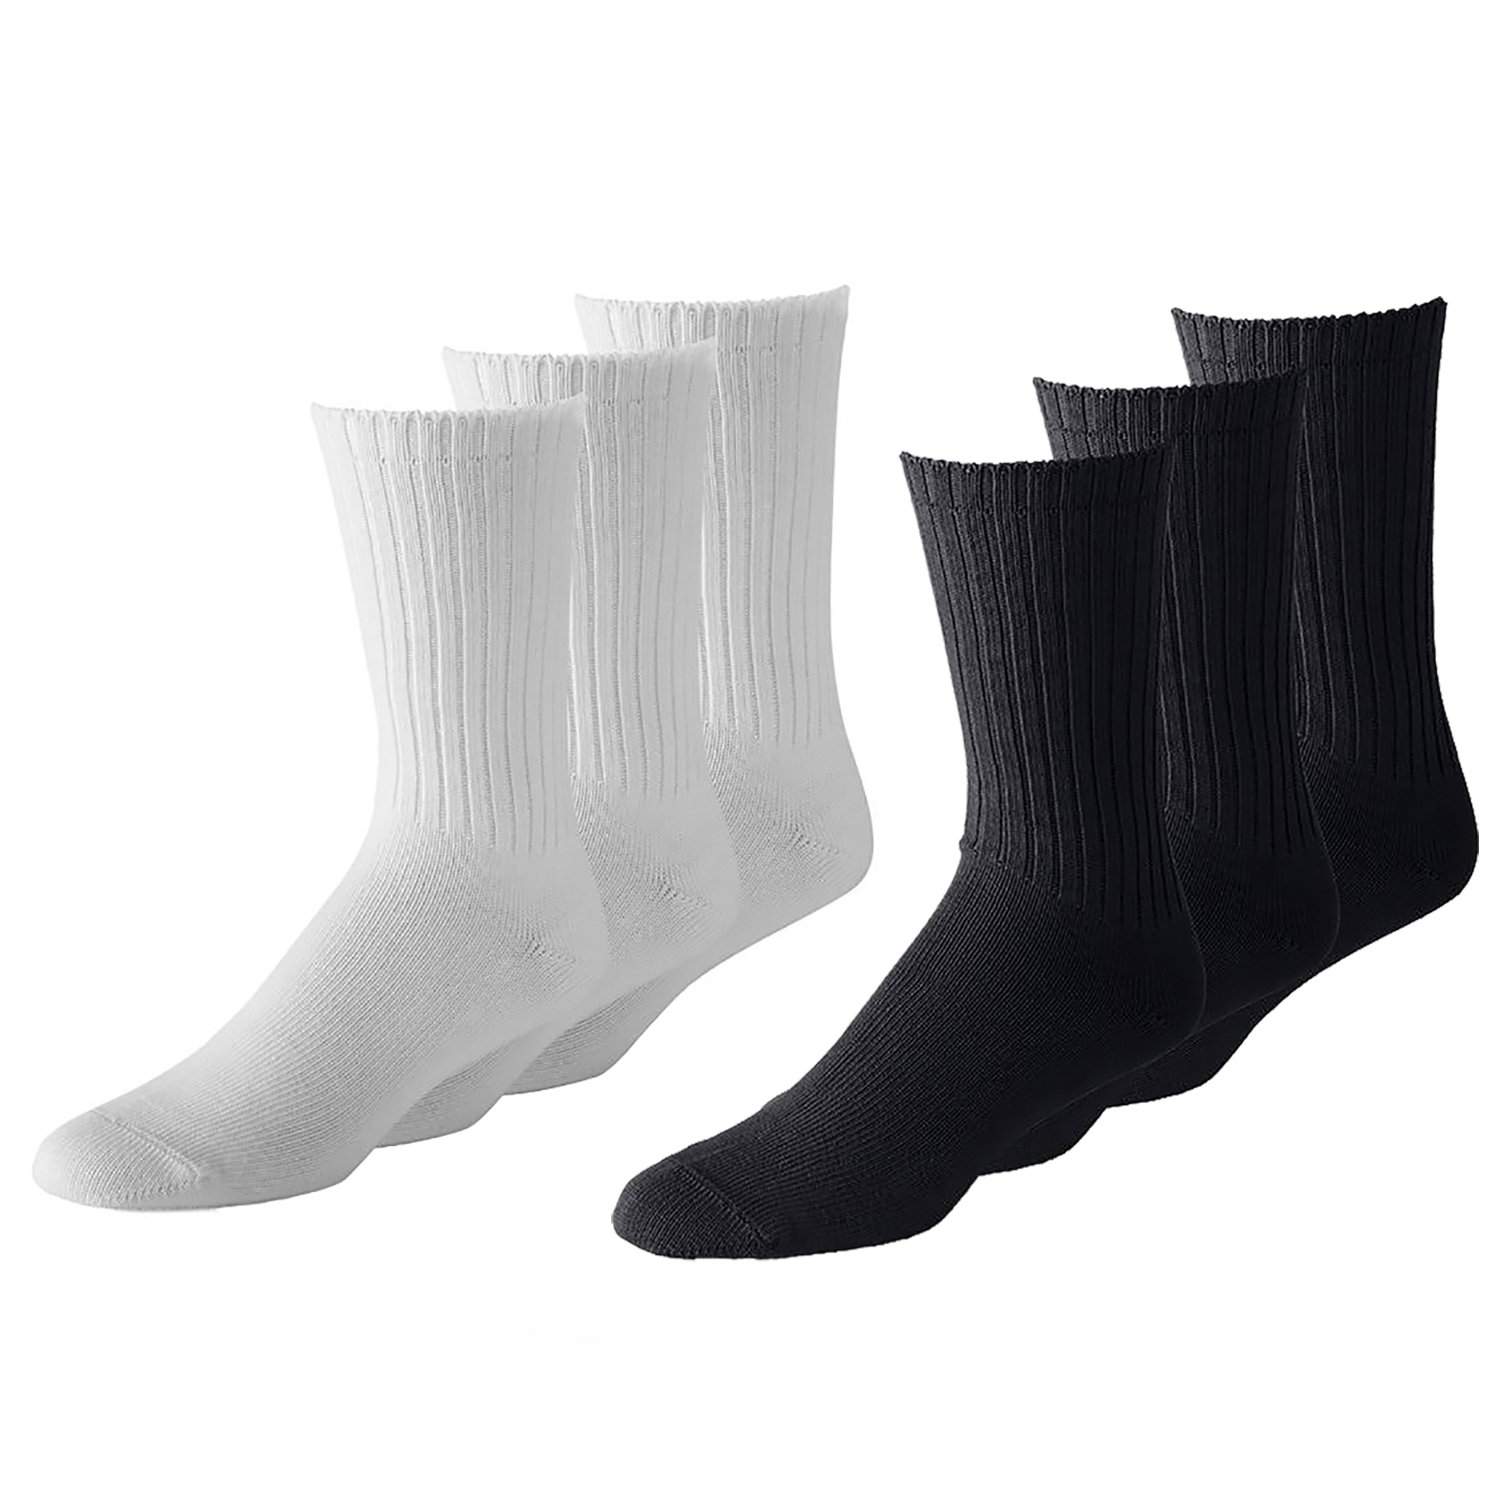 Jordefano Unisex Crew Athletic Sports Cotton Socks 35 Pack